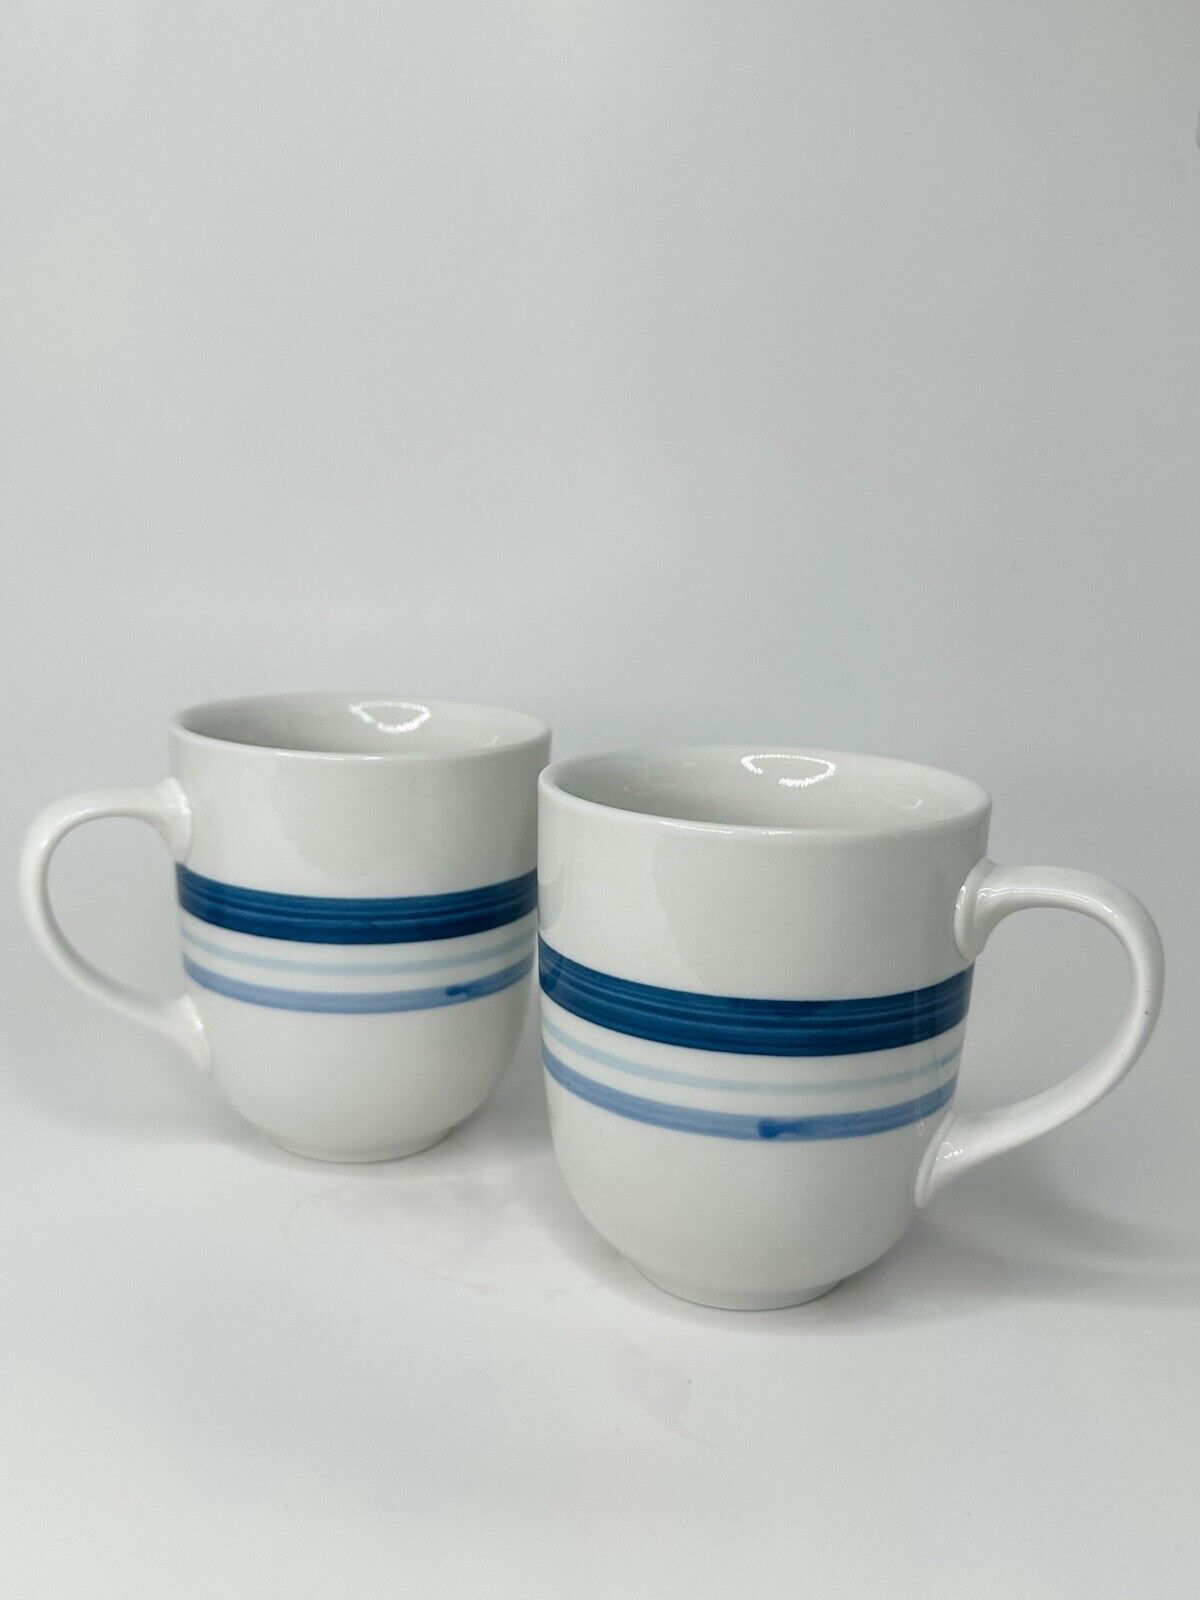 Mainstays Home Coffee Mugs Lot 2 White w Blue Stripes 